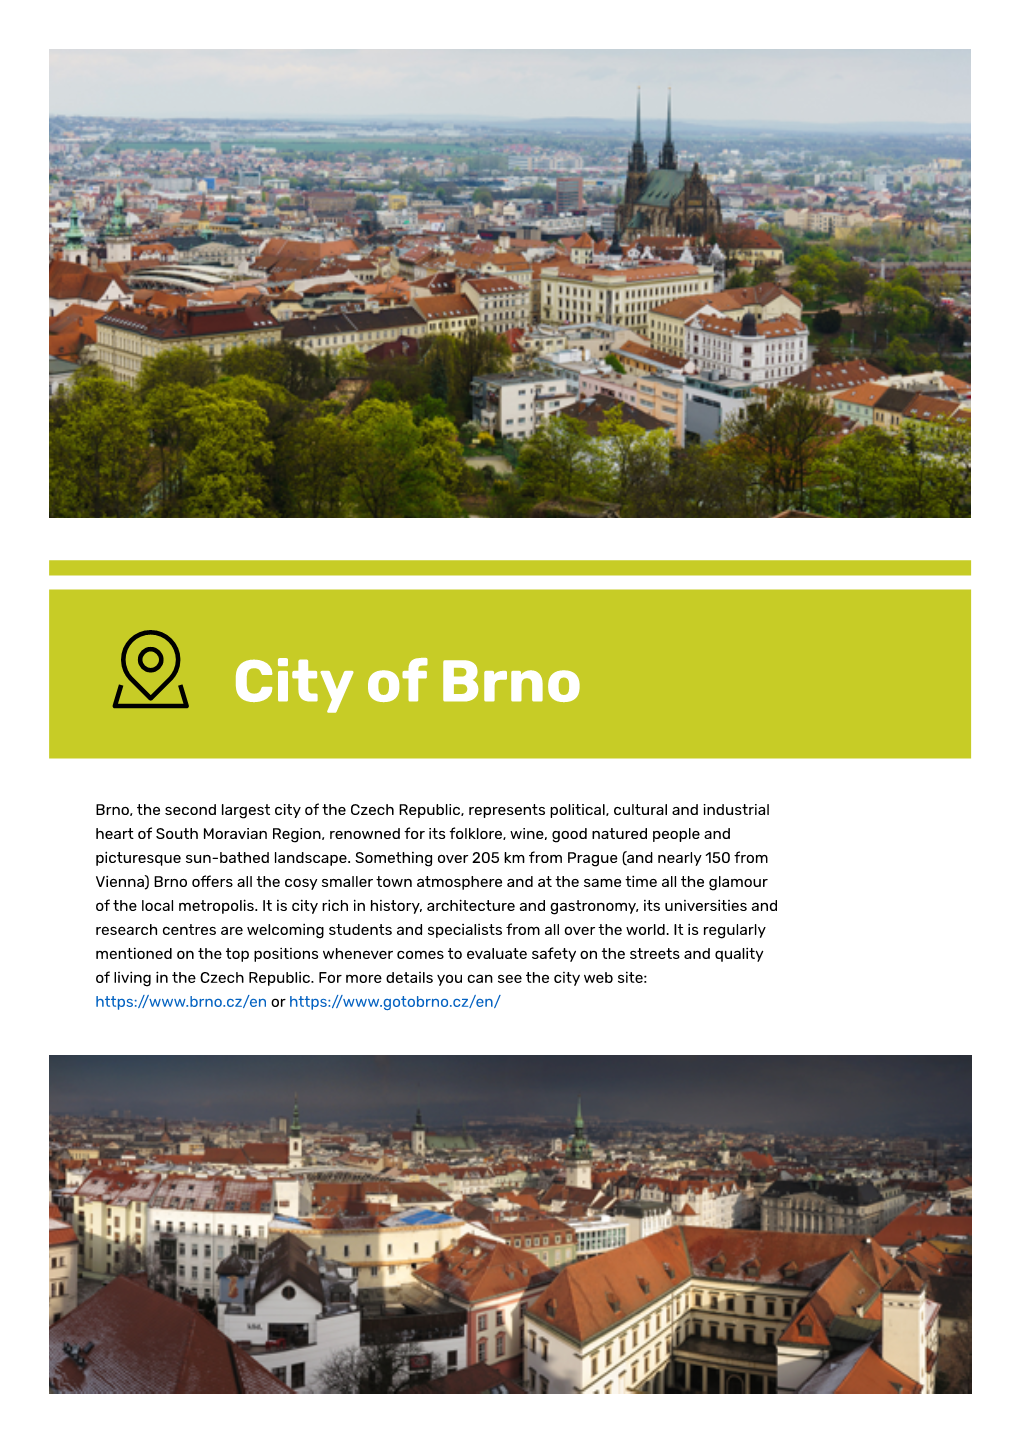 City of Brno